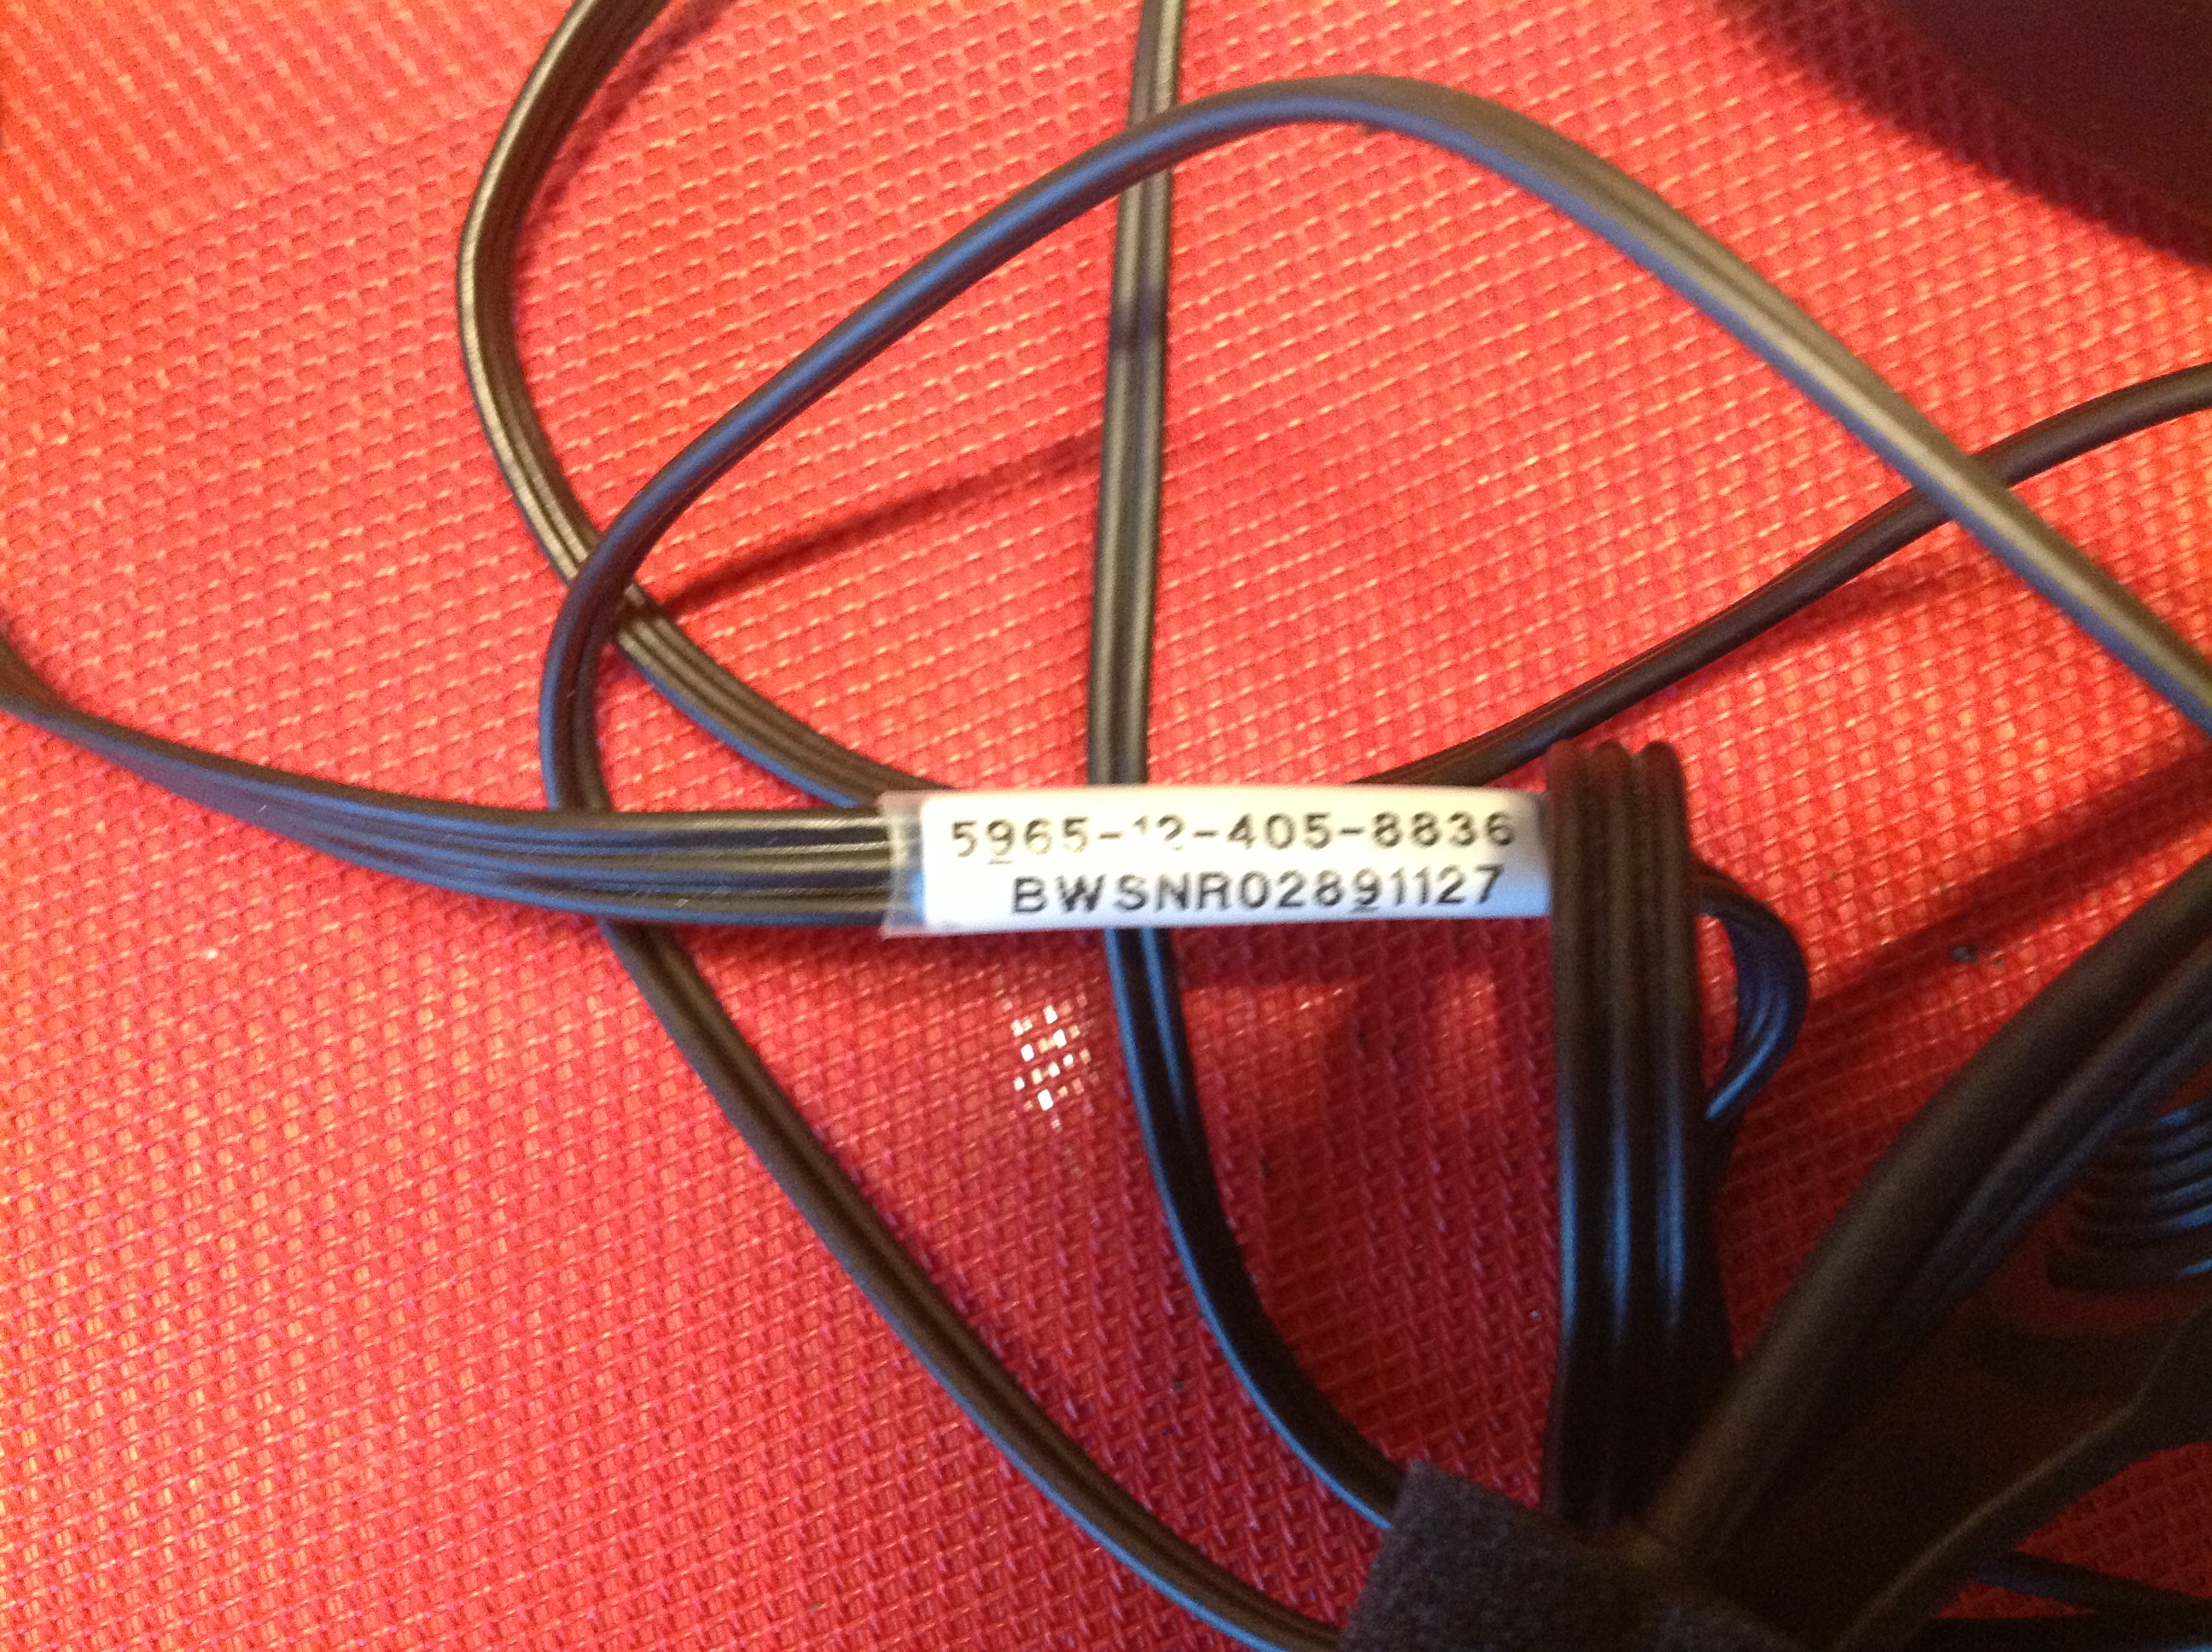 Kopfhörer-Mikrophon BWSNR2891127 mit 10 pol. Stecker